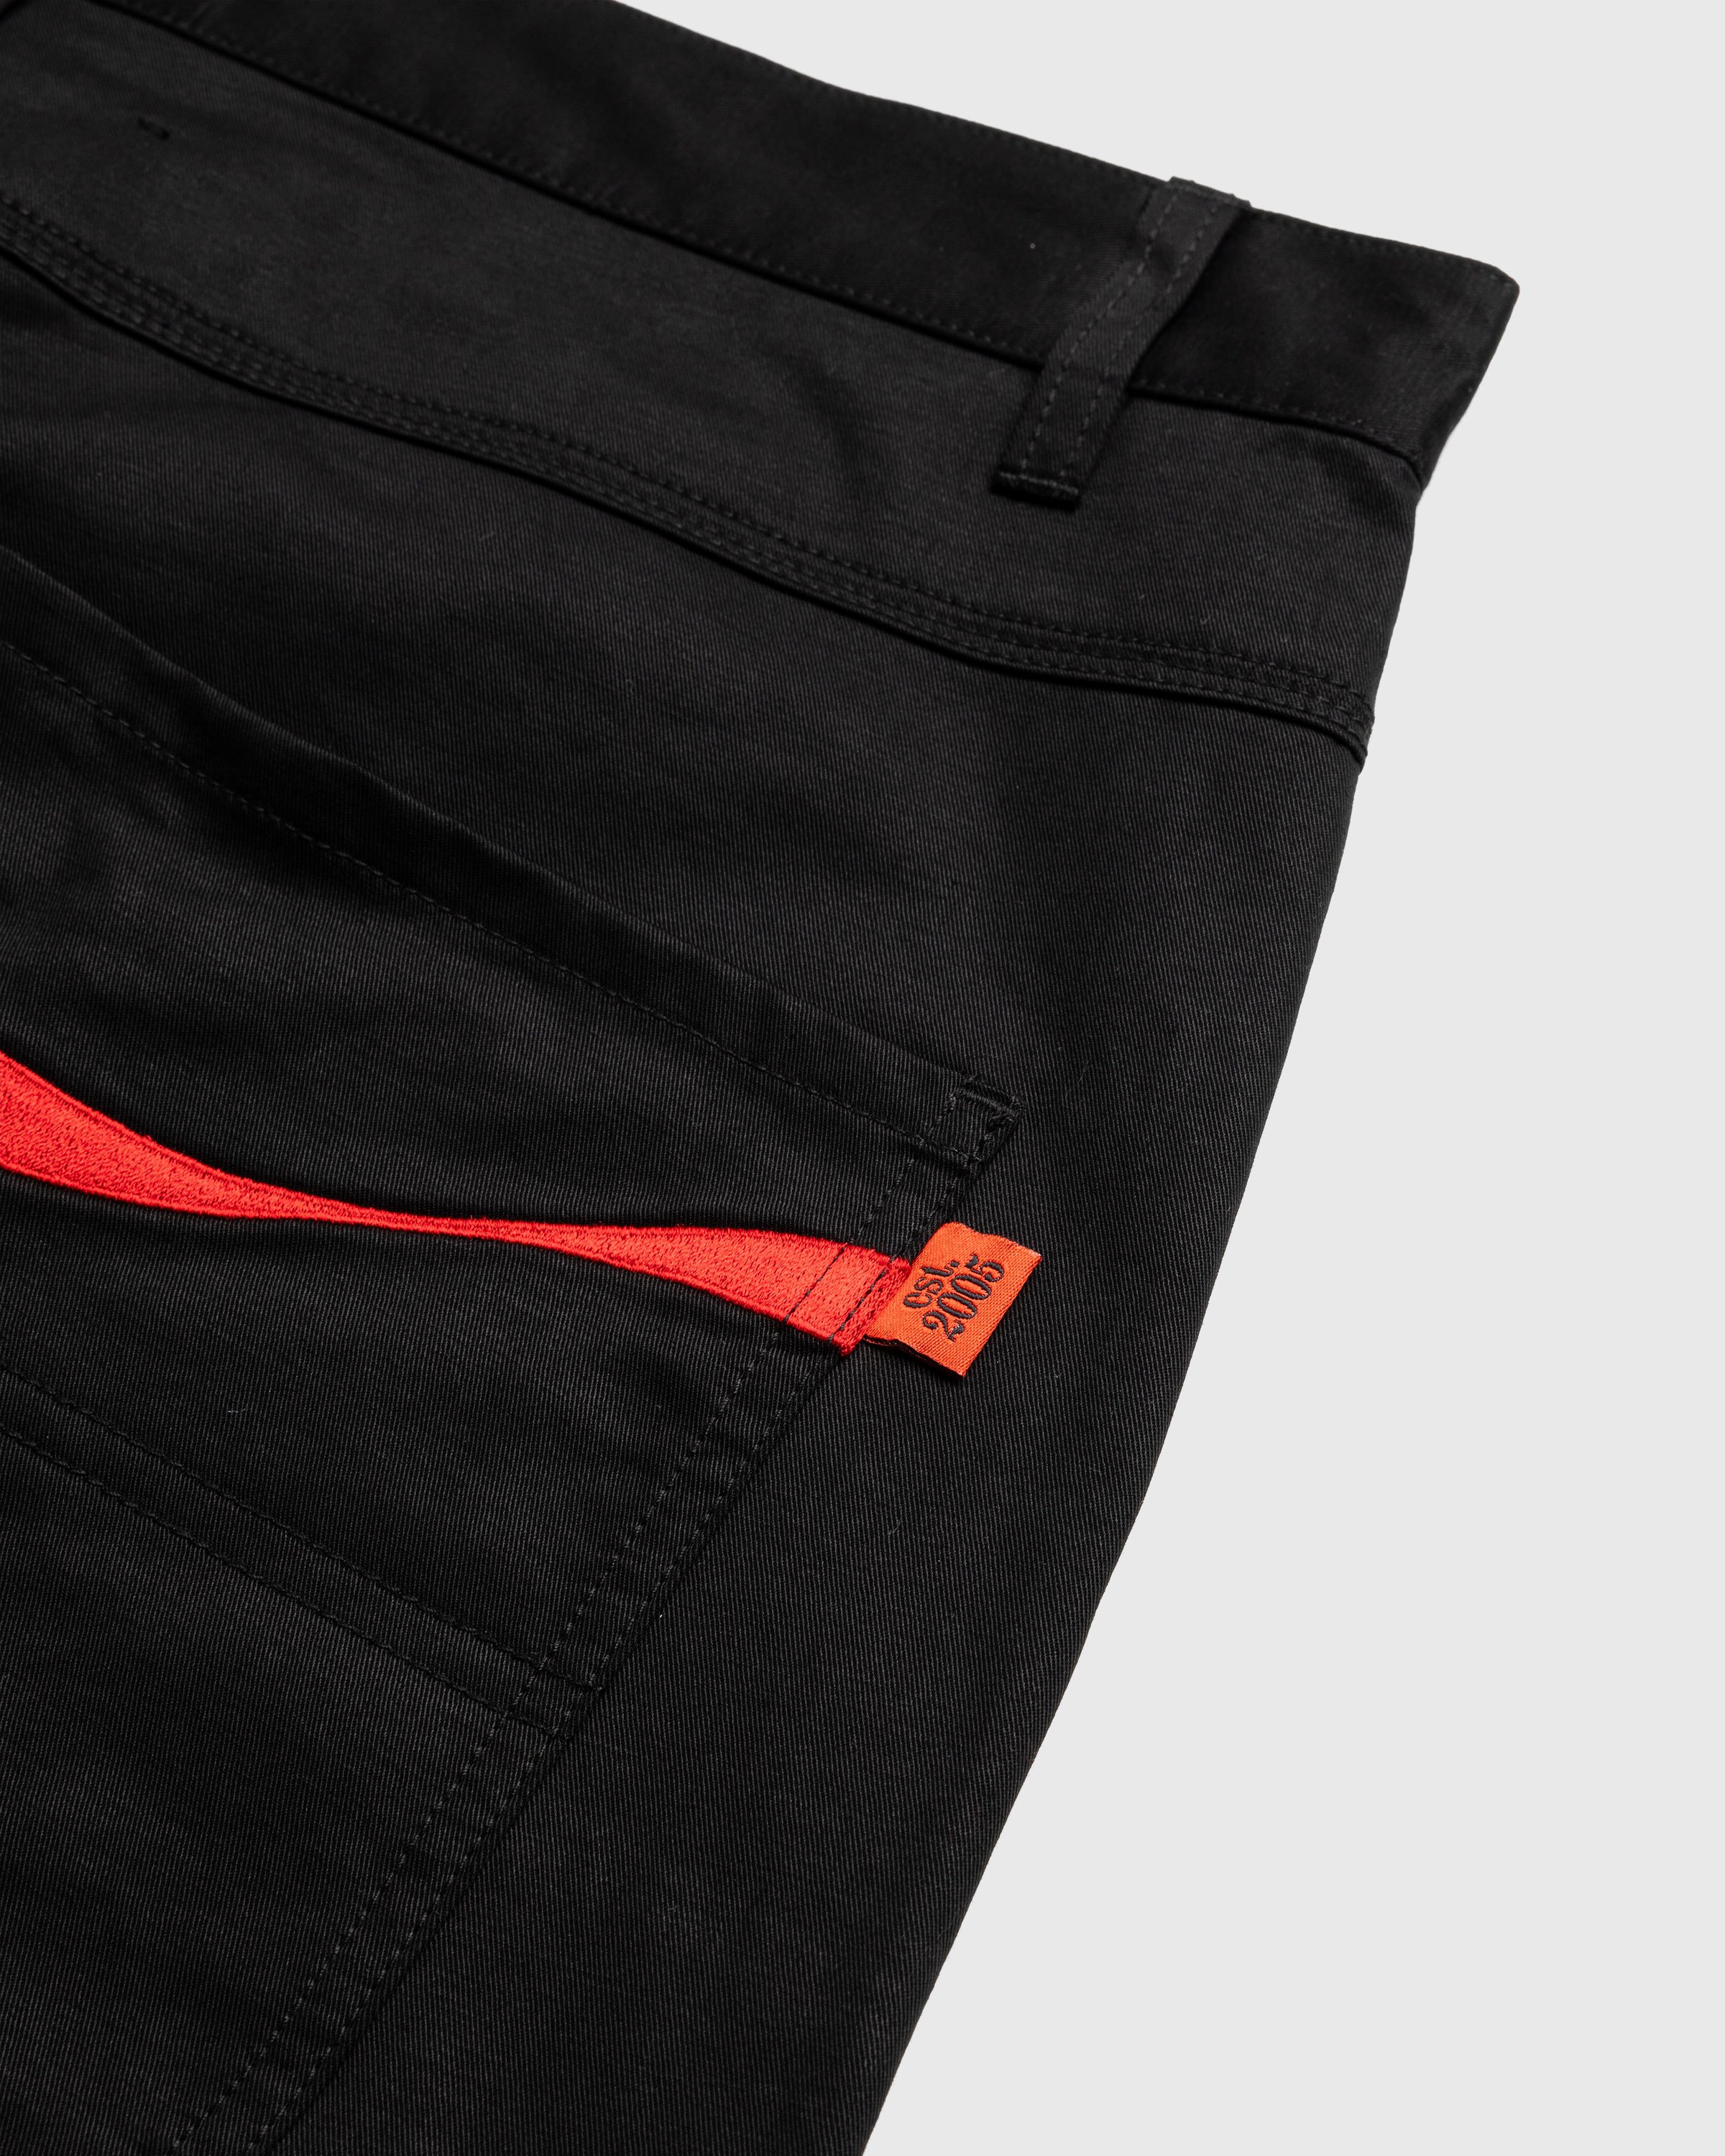 Highsnobiety x Coca-Cola Zero Sugar - Work Pants - Clothing - Black - Image 6